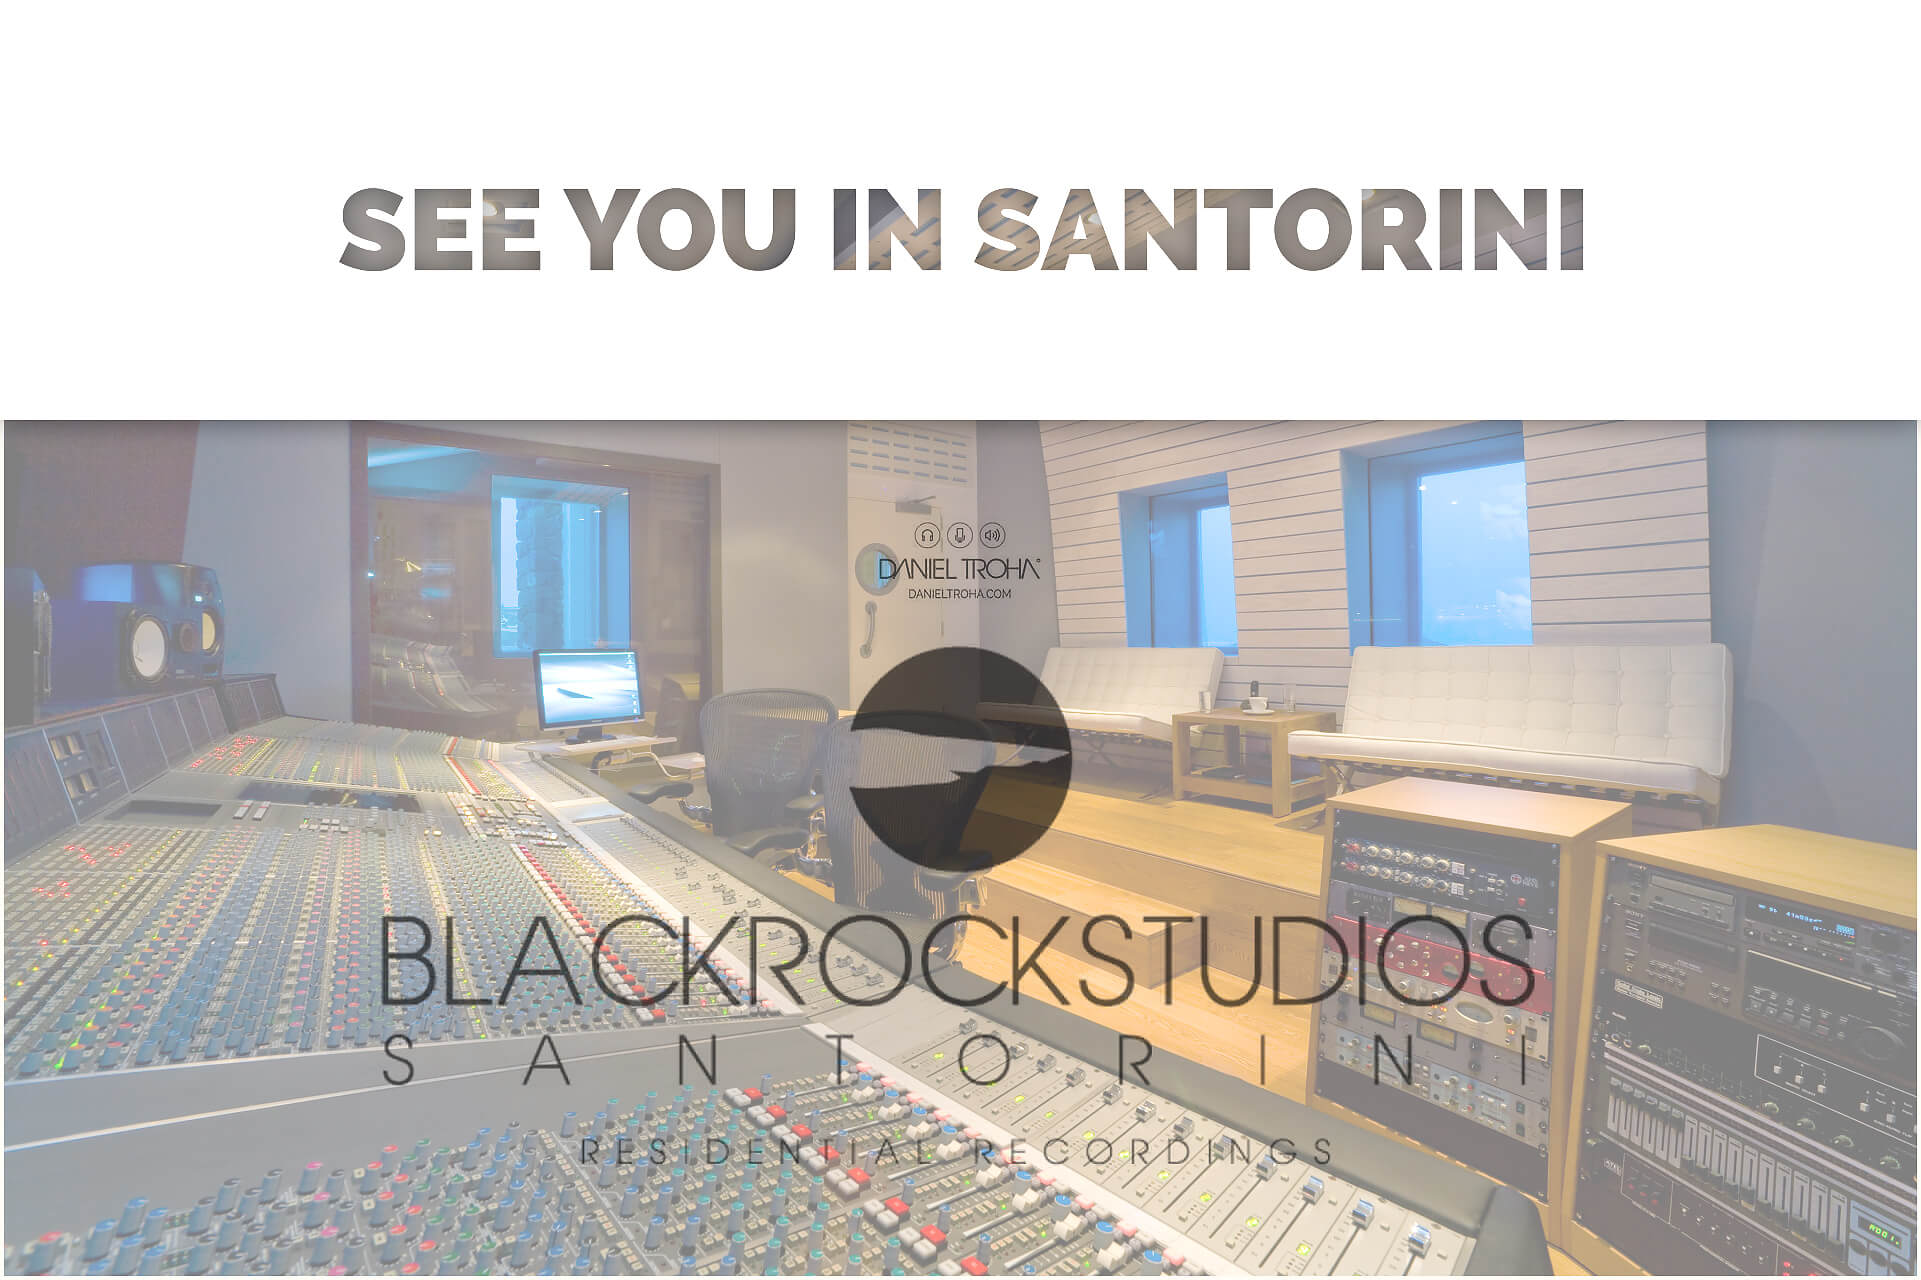 Blackrock Studio Santorini. Songwriting Camp.